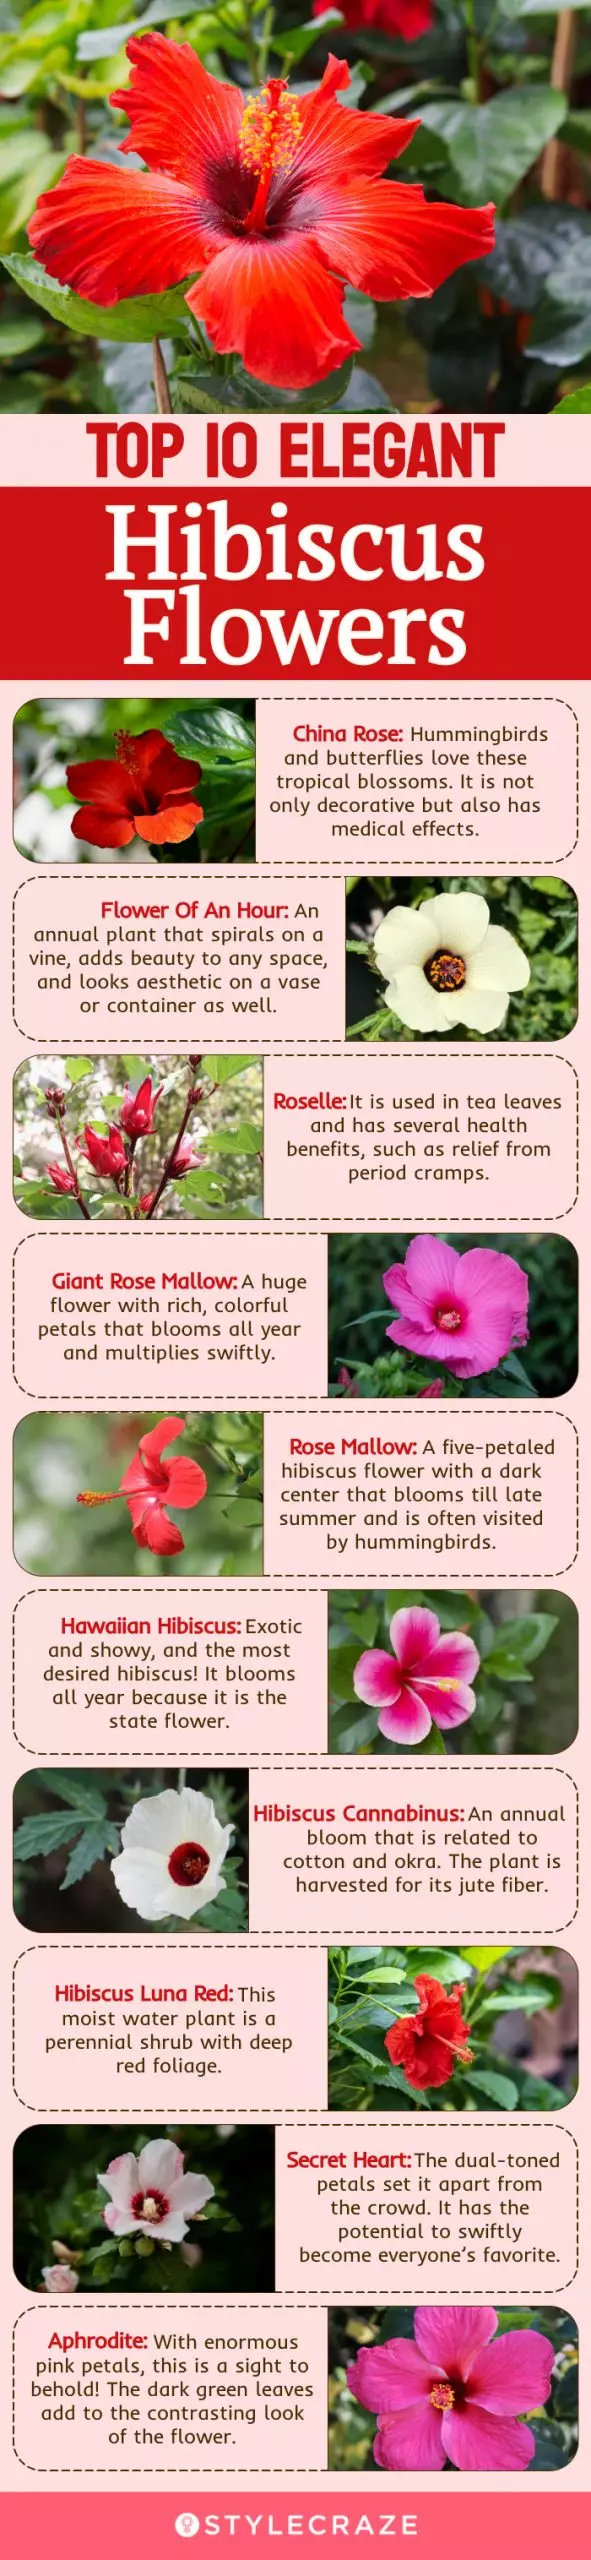 top 10 elegant hibiscus flowers (infographic)